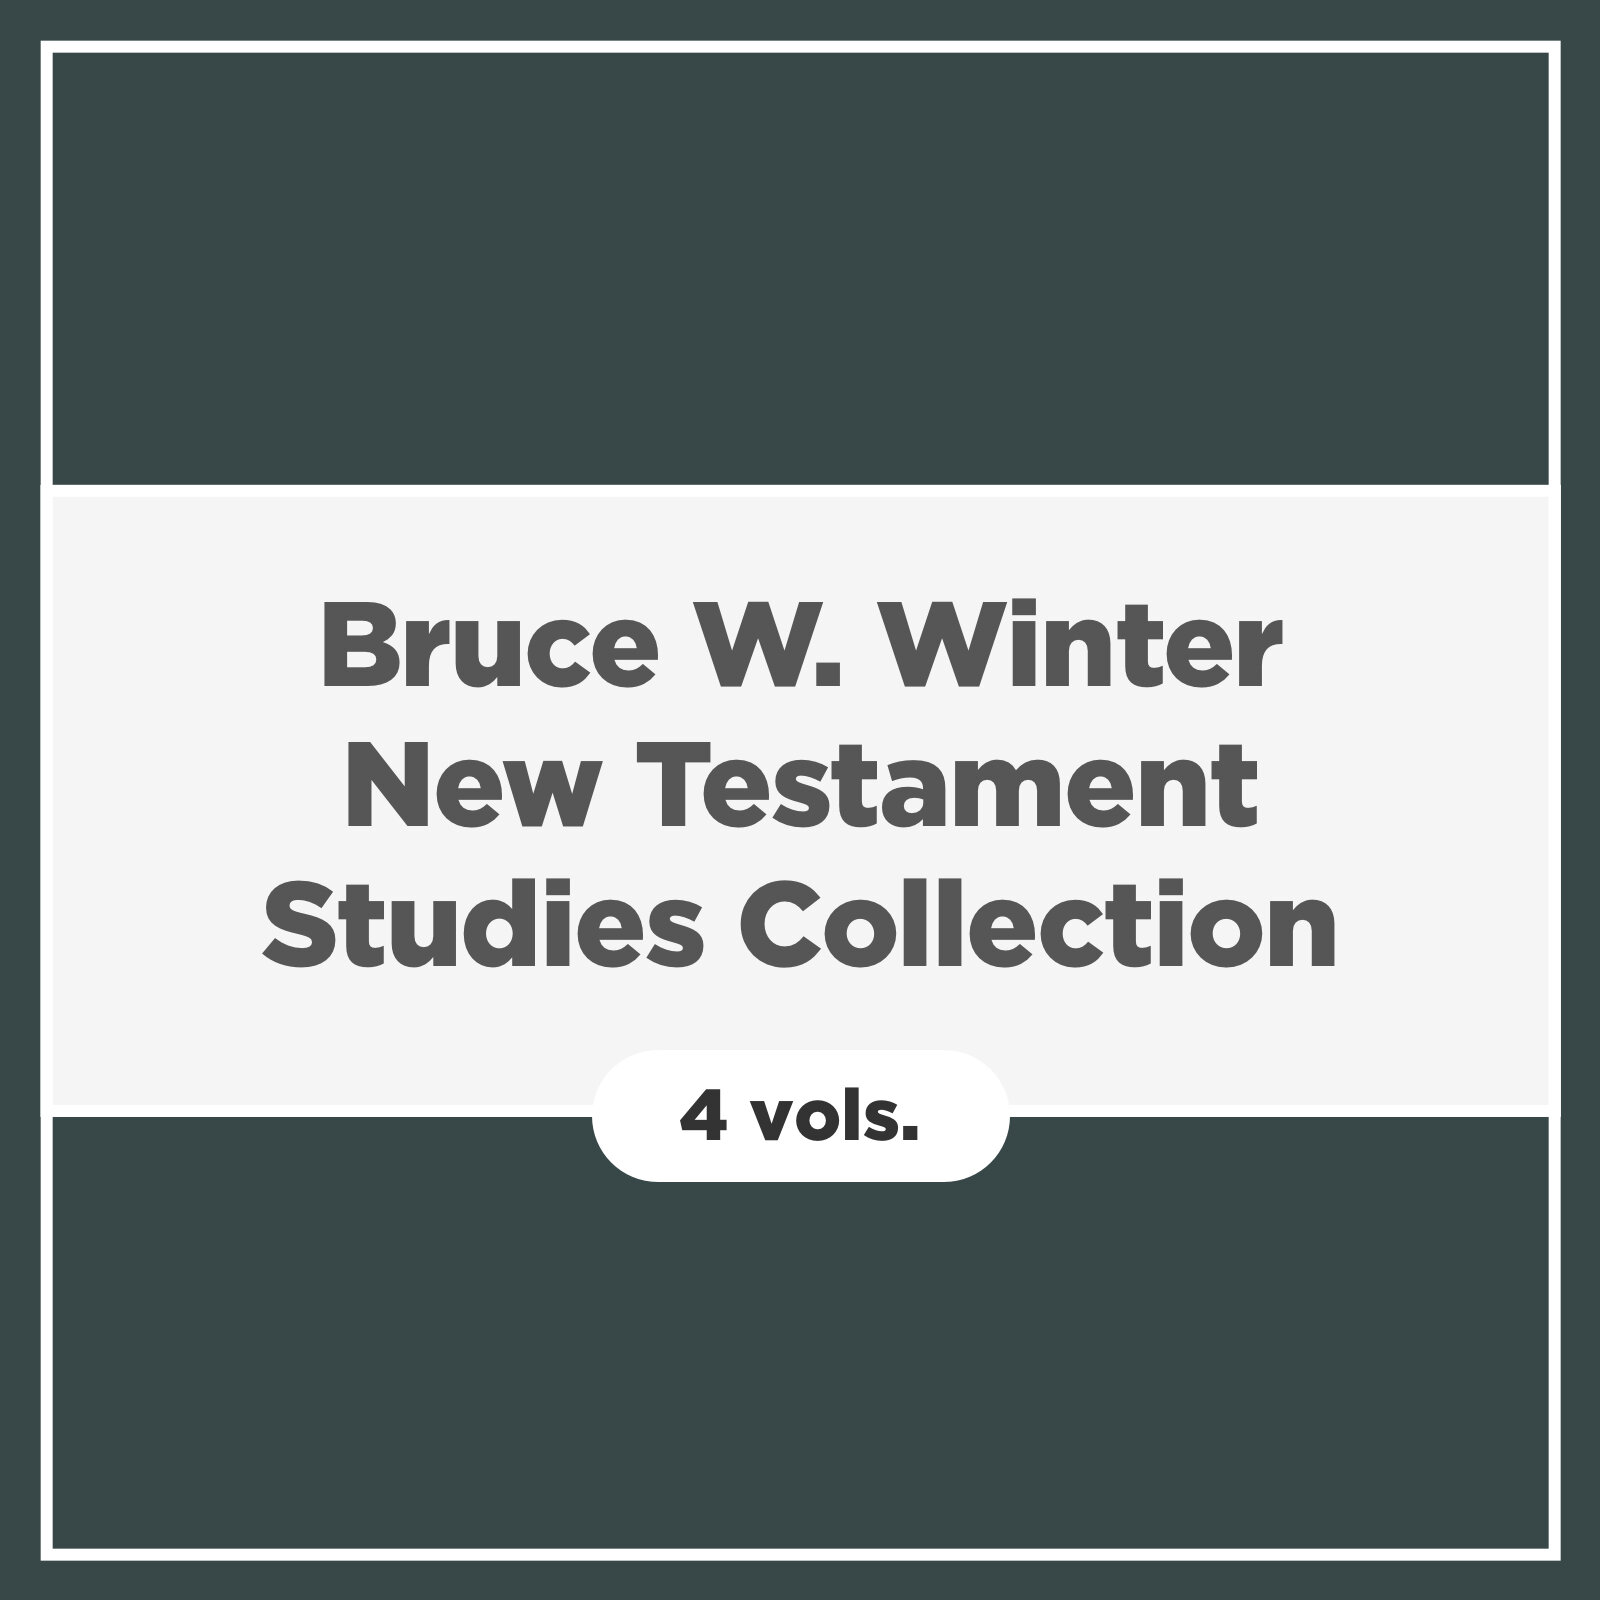 Bruce W. Winter New Testament Studies Collection (4 vols.)